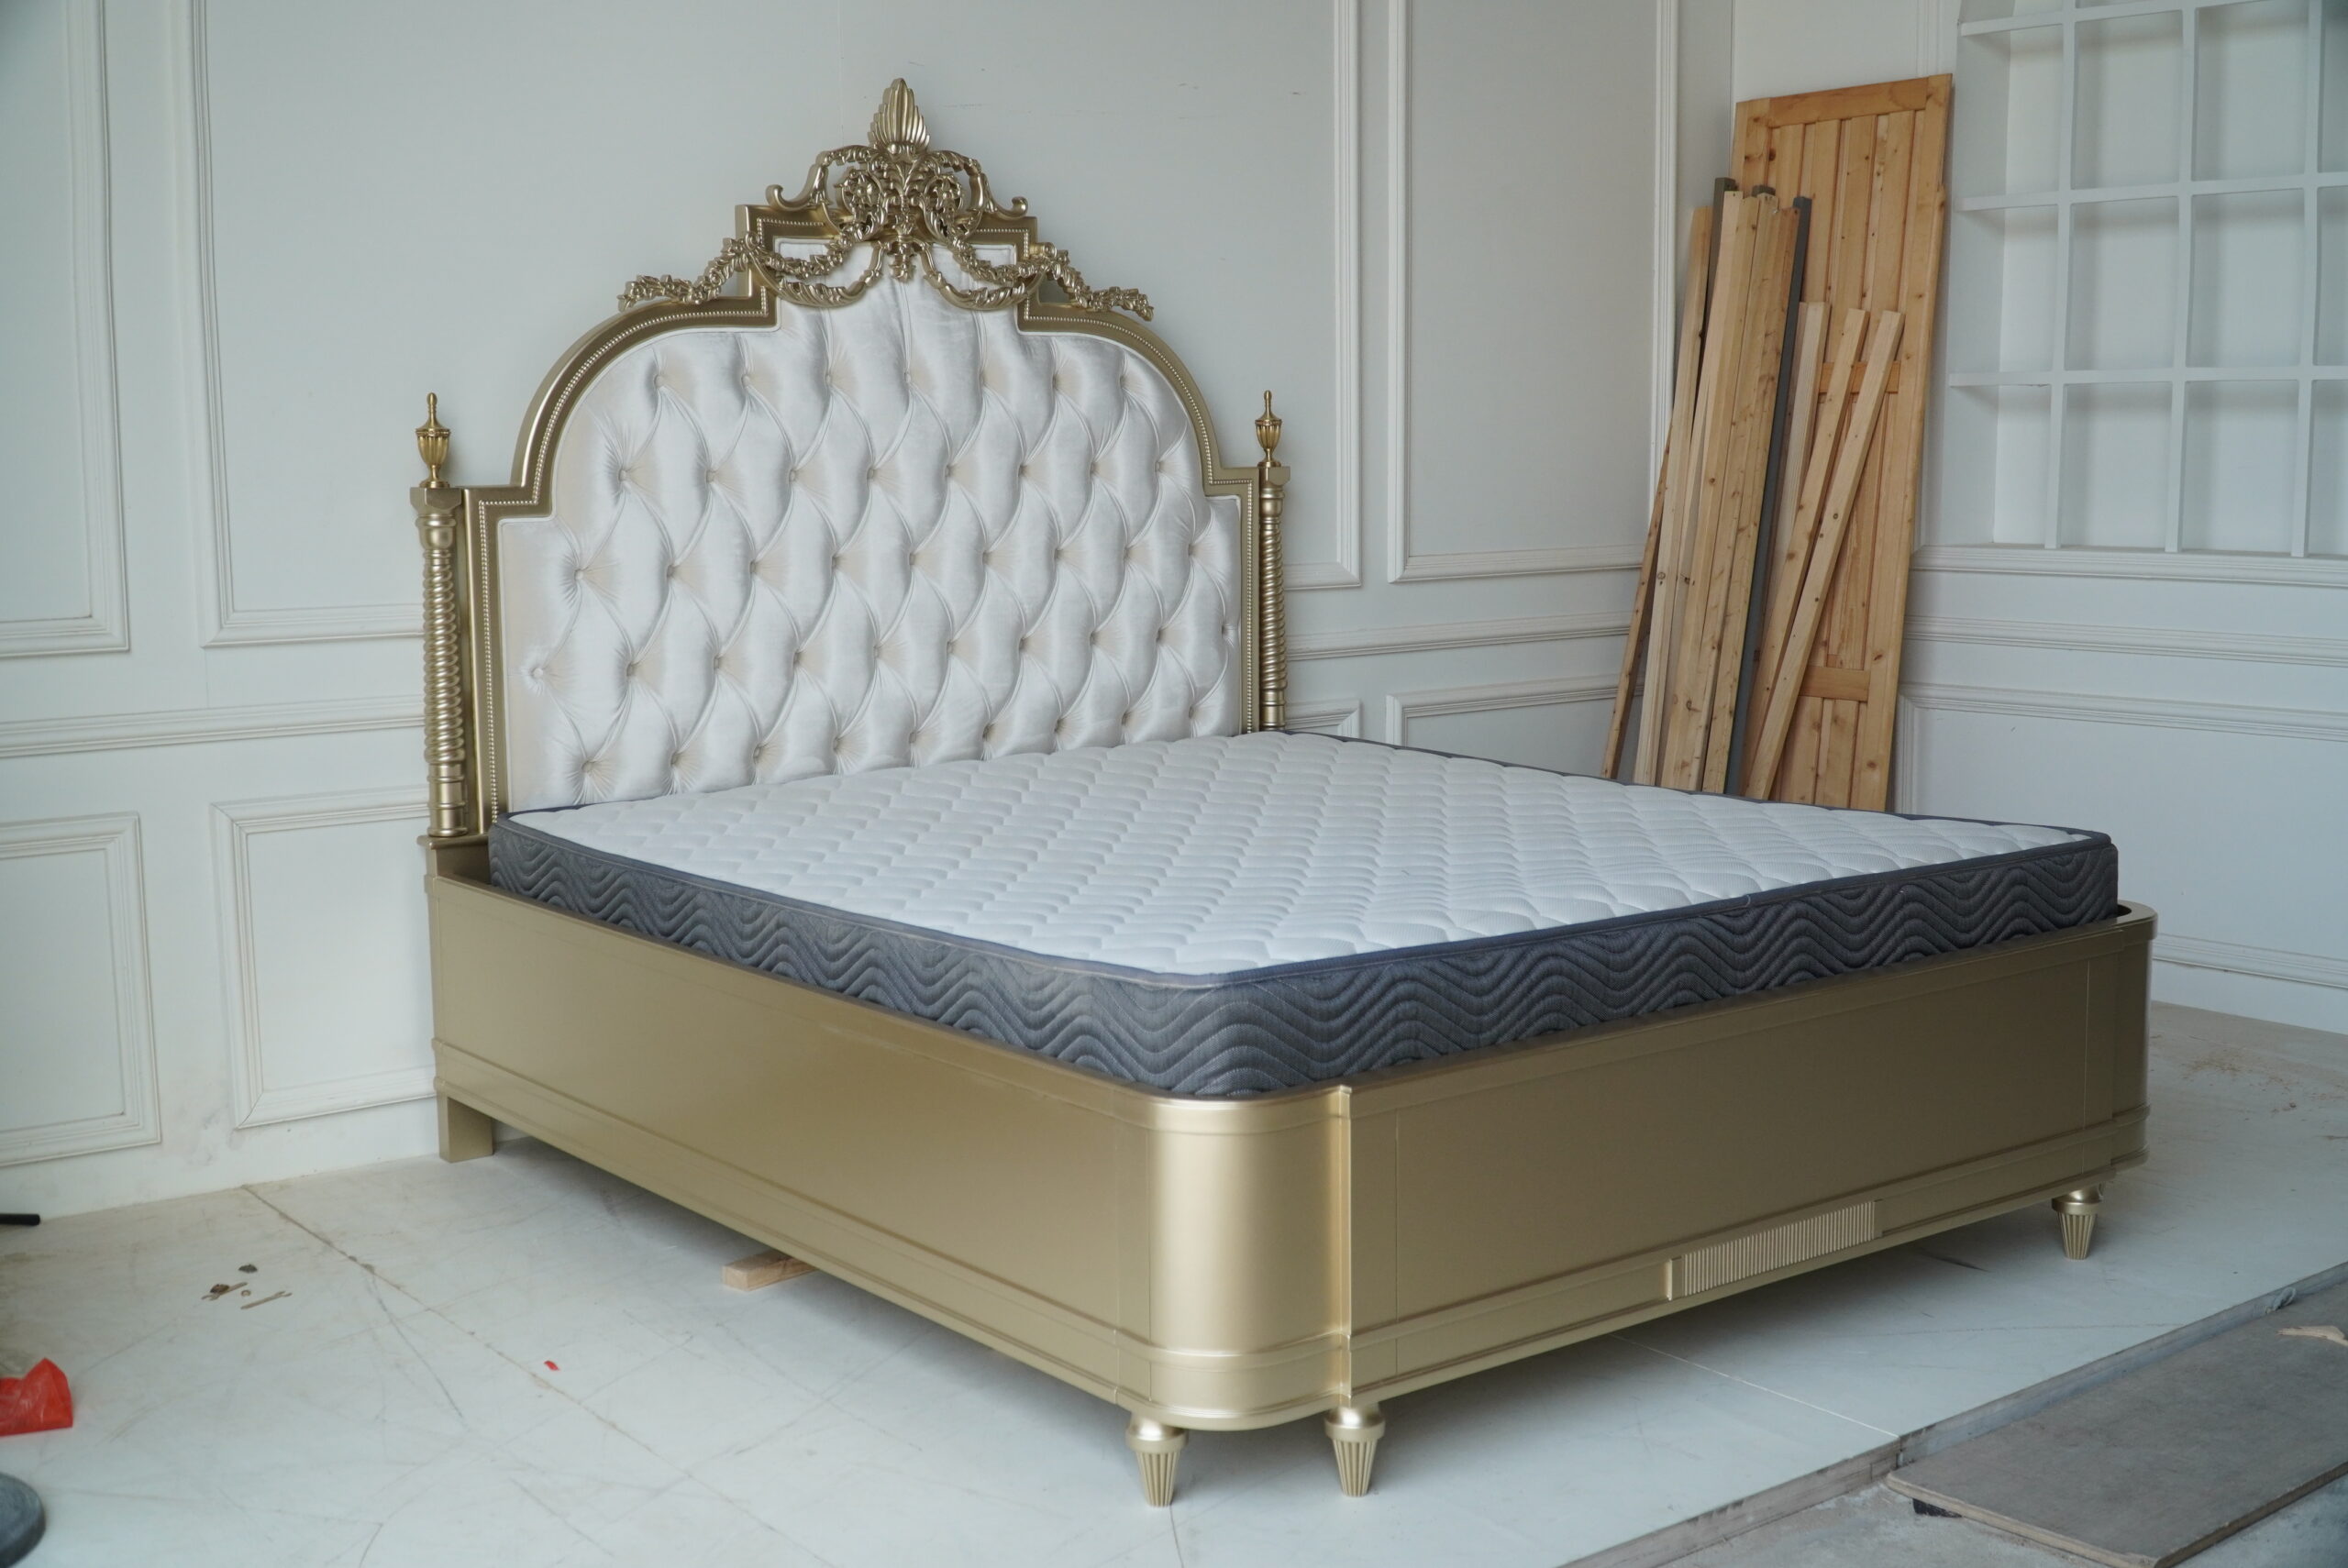 Chesterfield Holz Doppelbett Betten Design Polster Bett Ehe Schlafzimmer 180×200